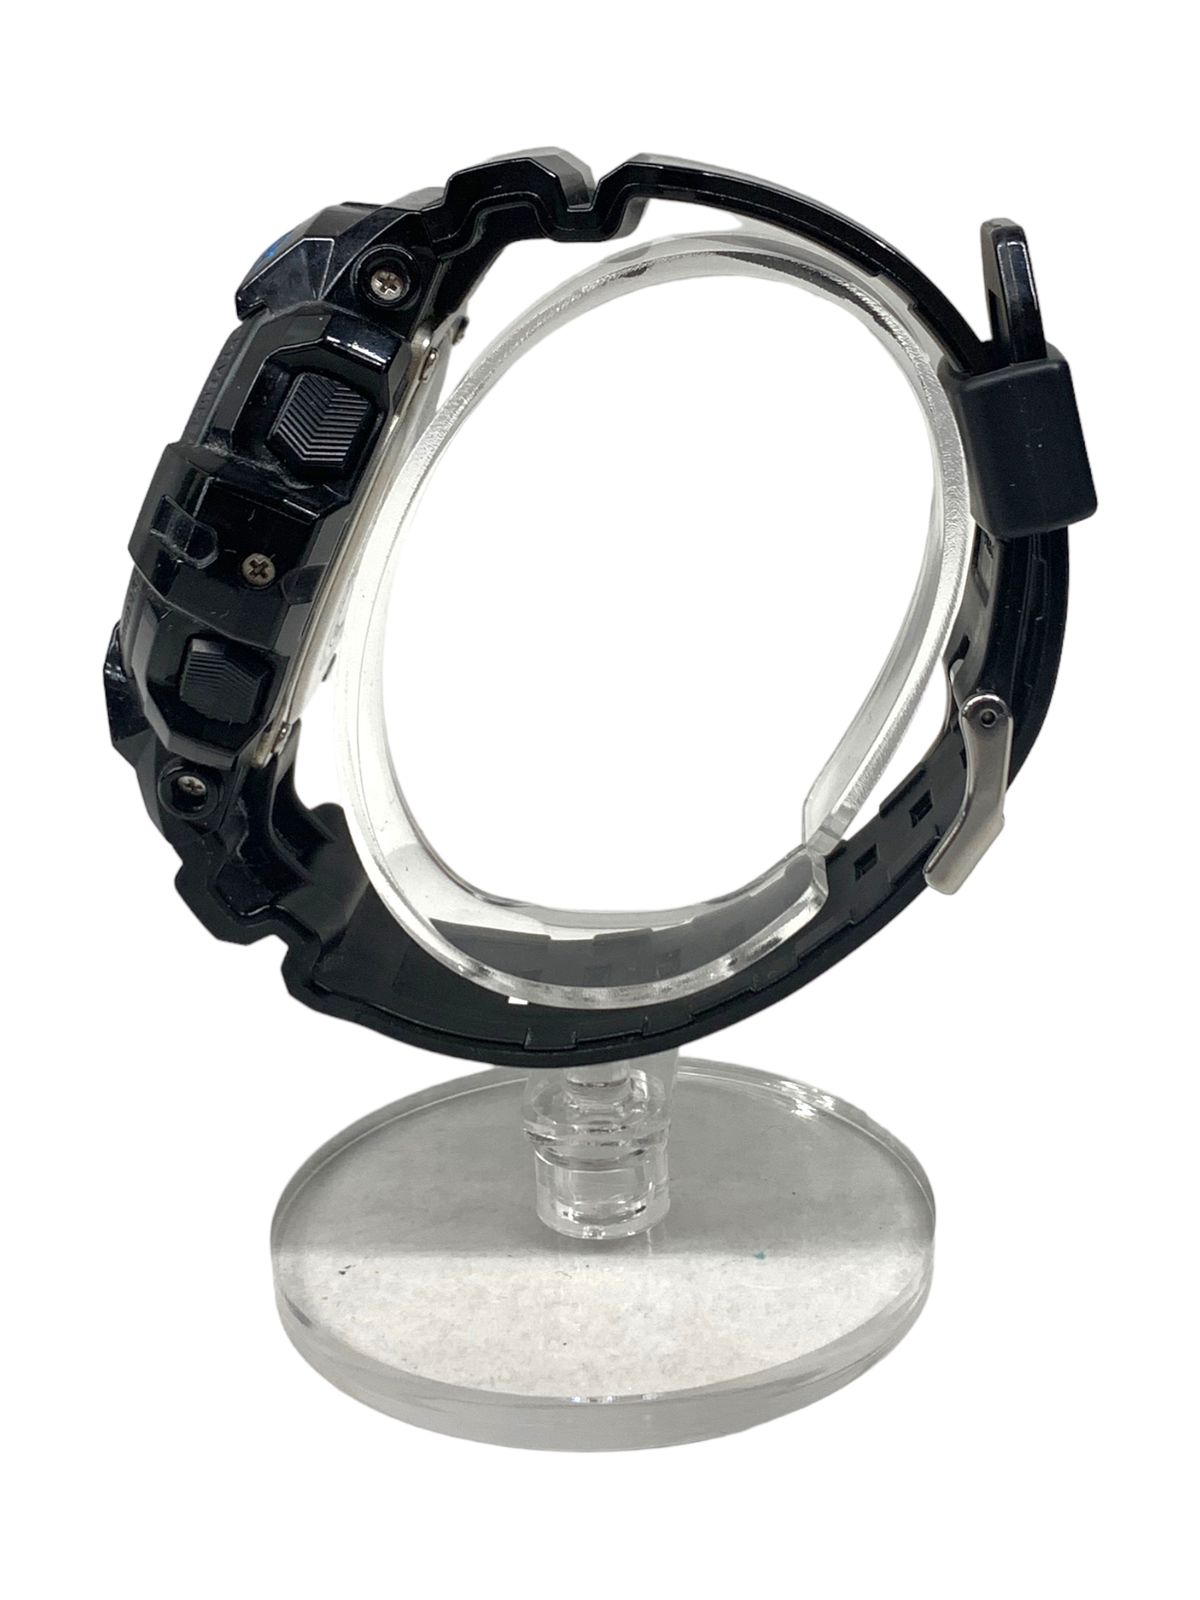 CASIO (カシオ) G-SHOCK Gショック デジタル腕時計 ソーラー GWX-8900 ブラック メンズ/036 